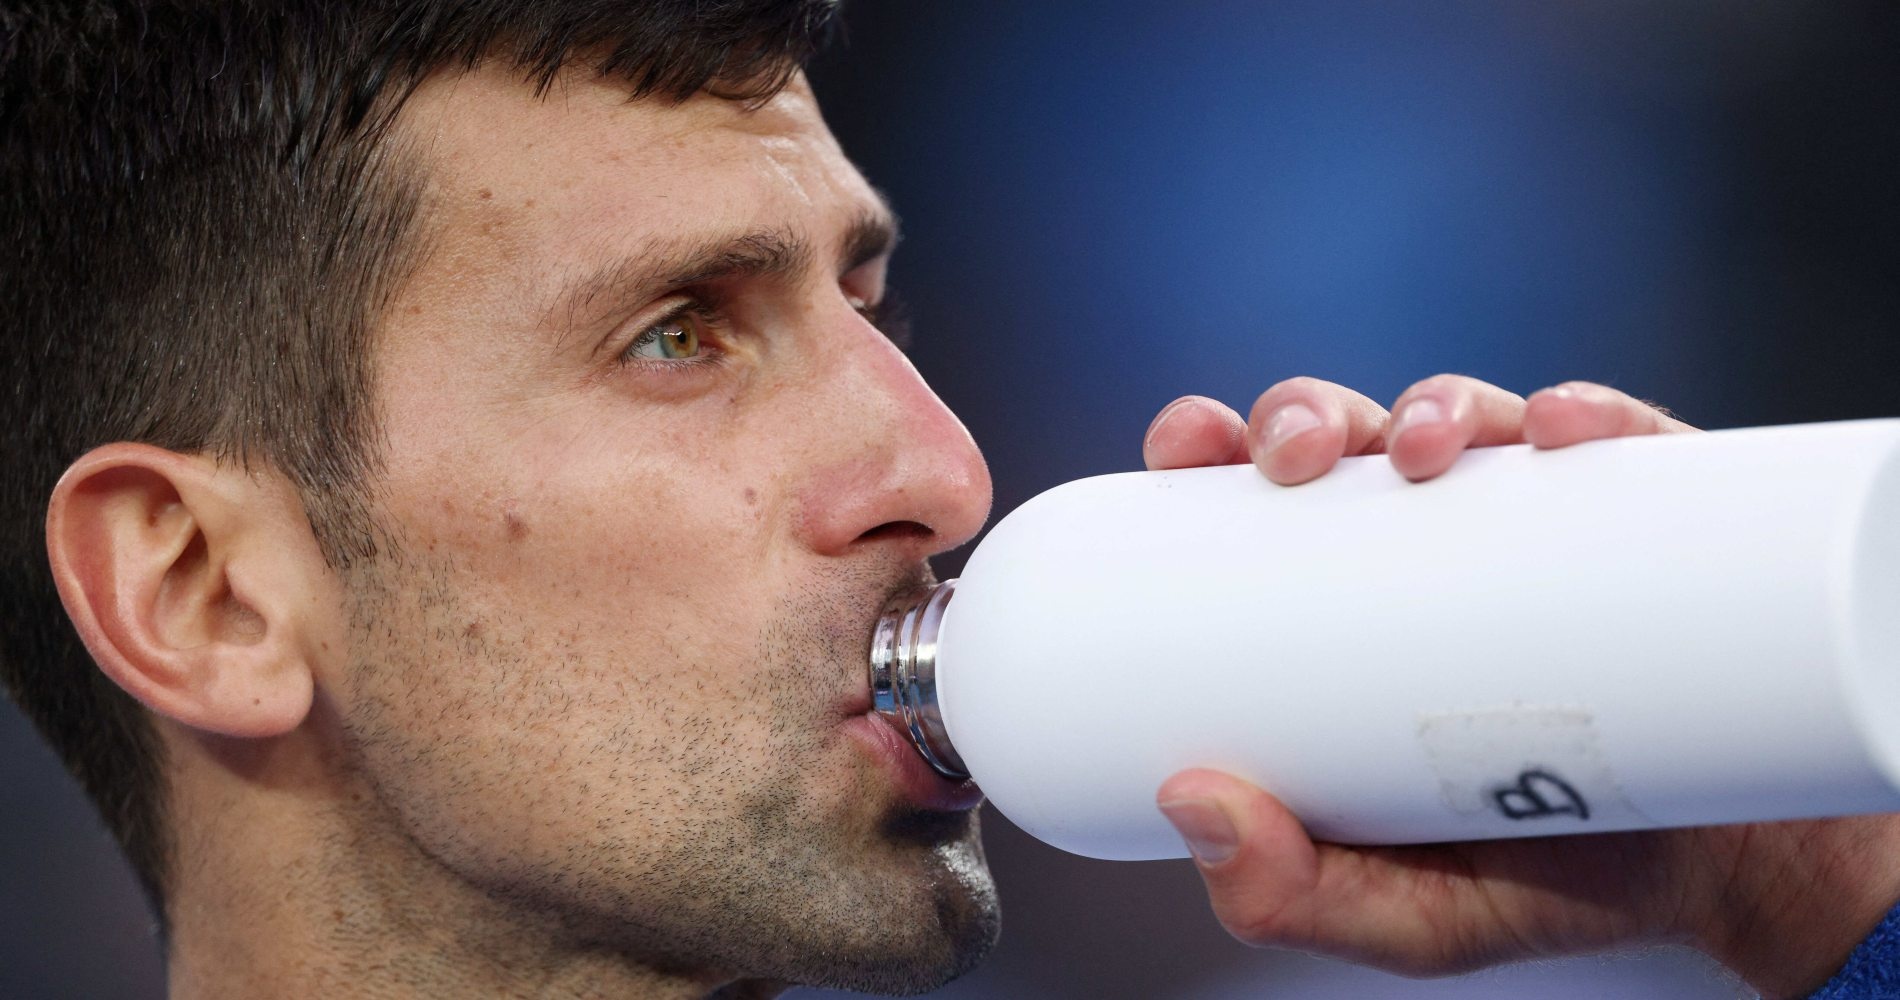 waterdrop launches in Australia with the help of Novak Djokovic - Food &  Beverage Industry News